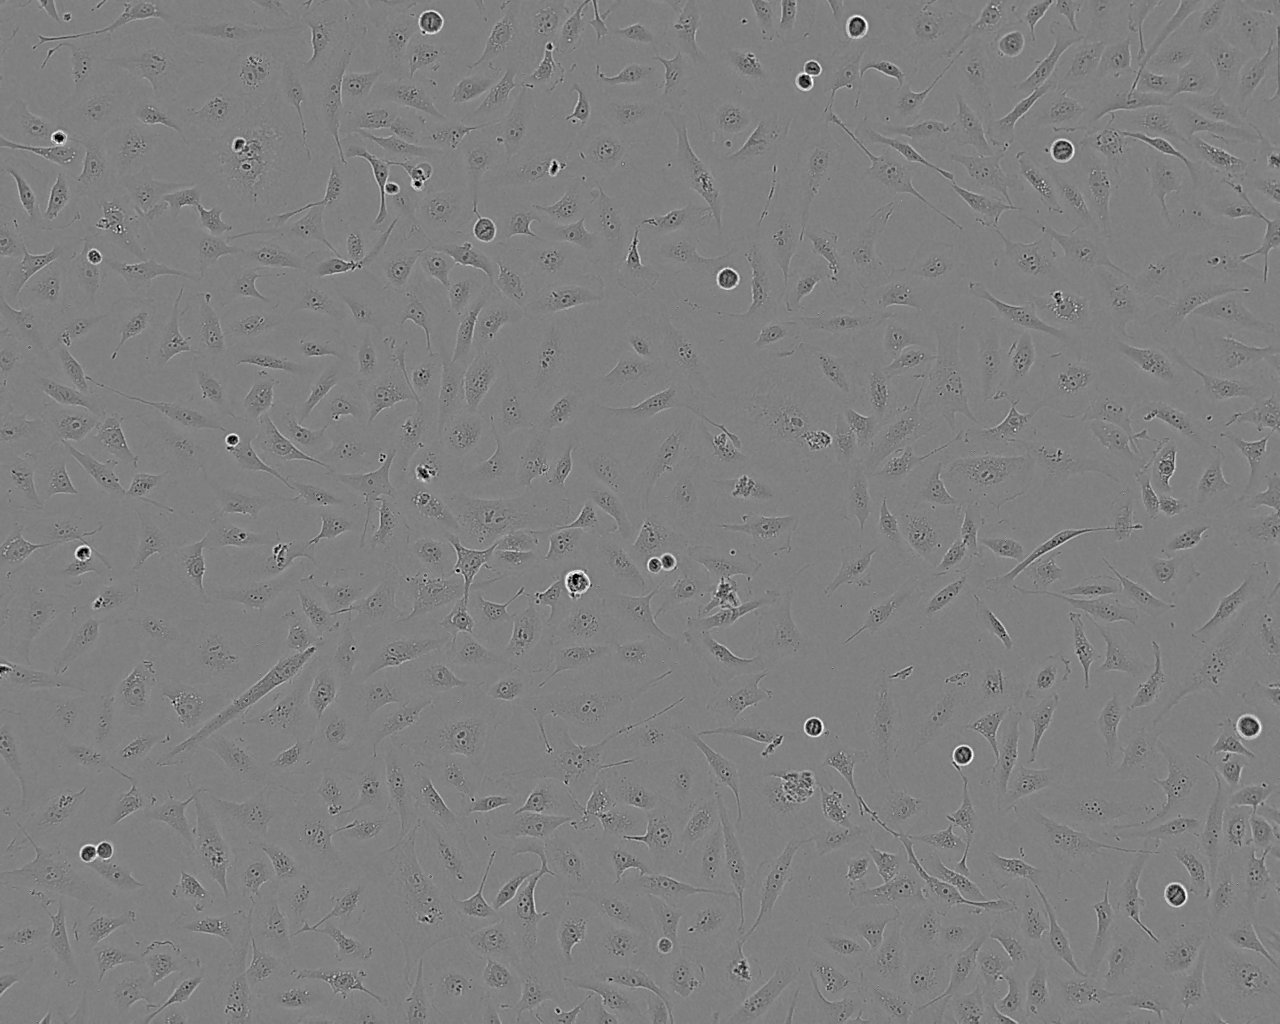 NCI-H1437 epithelioid cells人非小细胞肺癌细胞系